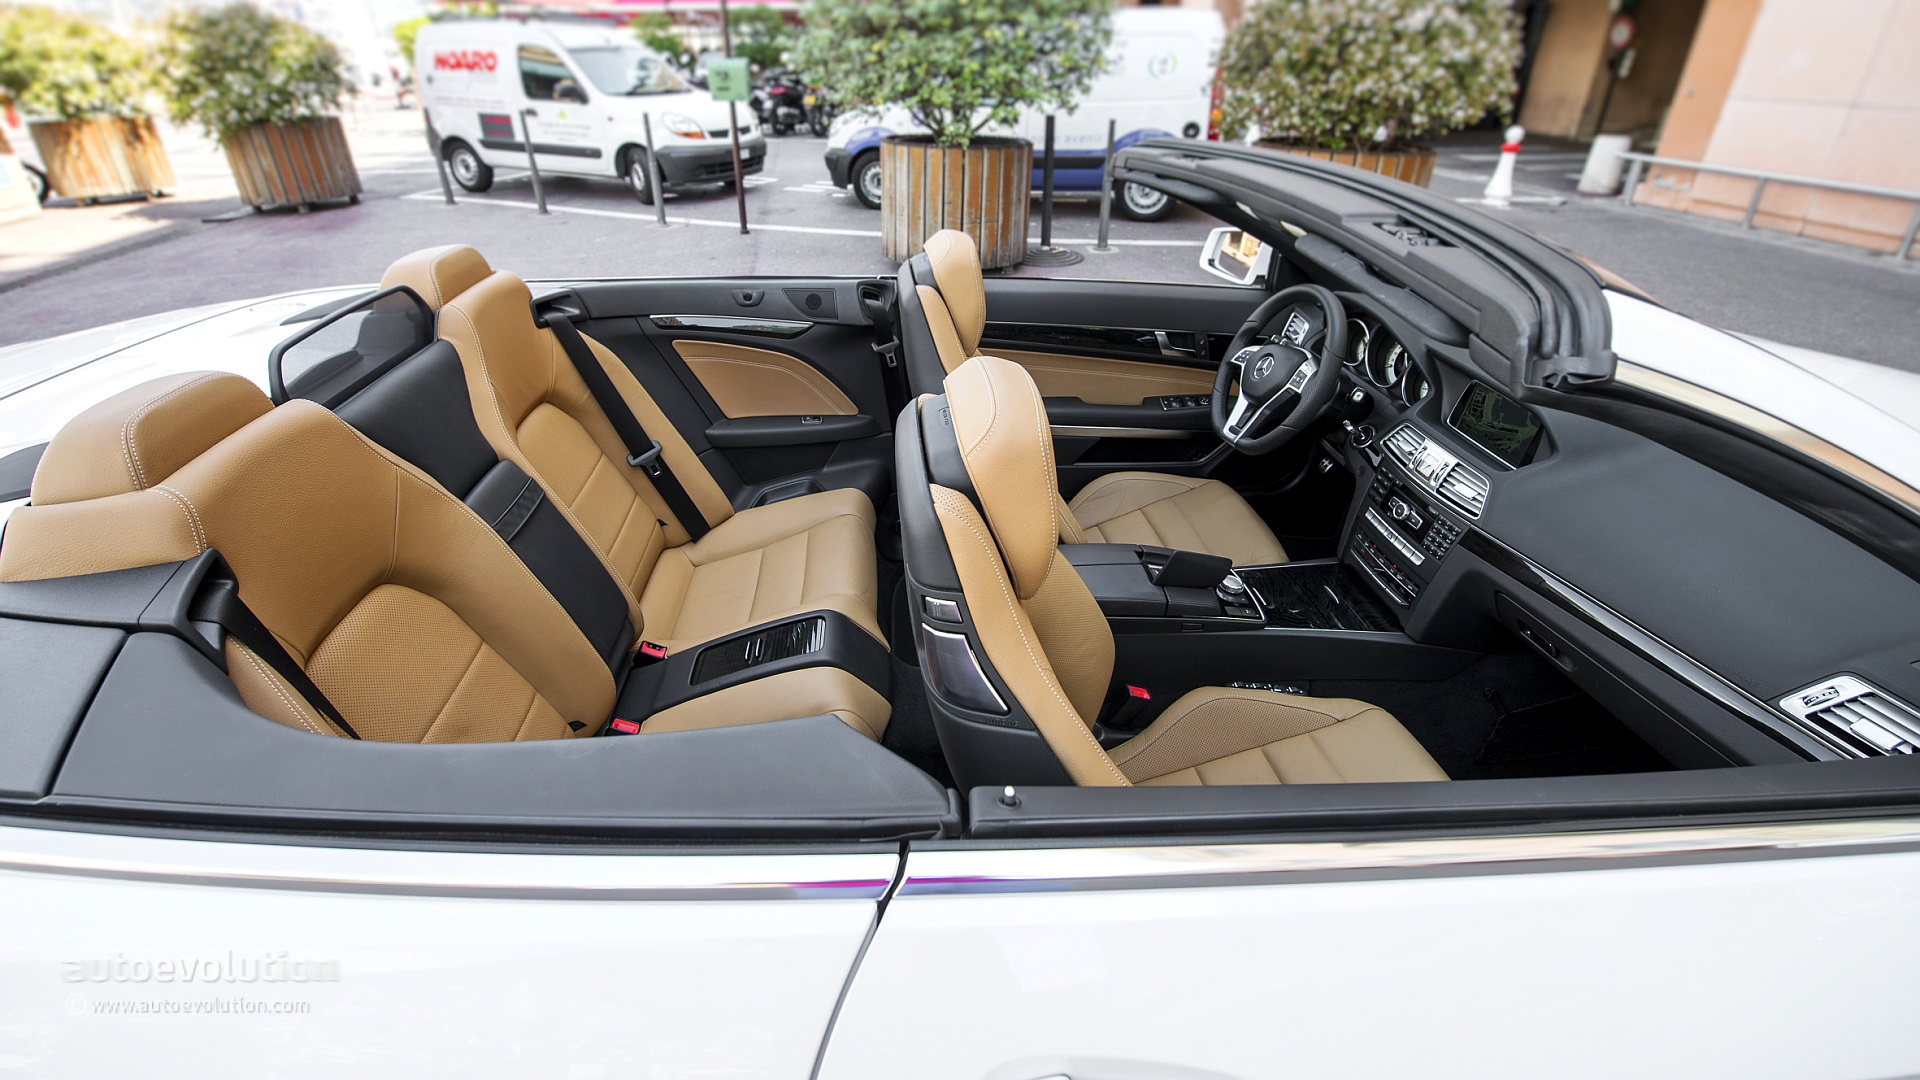 2014 Mercedes Benz E Class Cabriolet Review Page 3